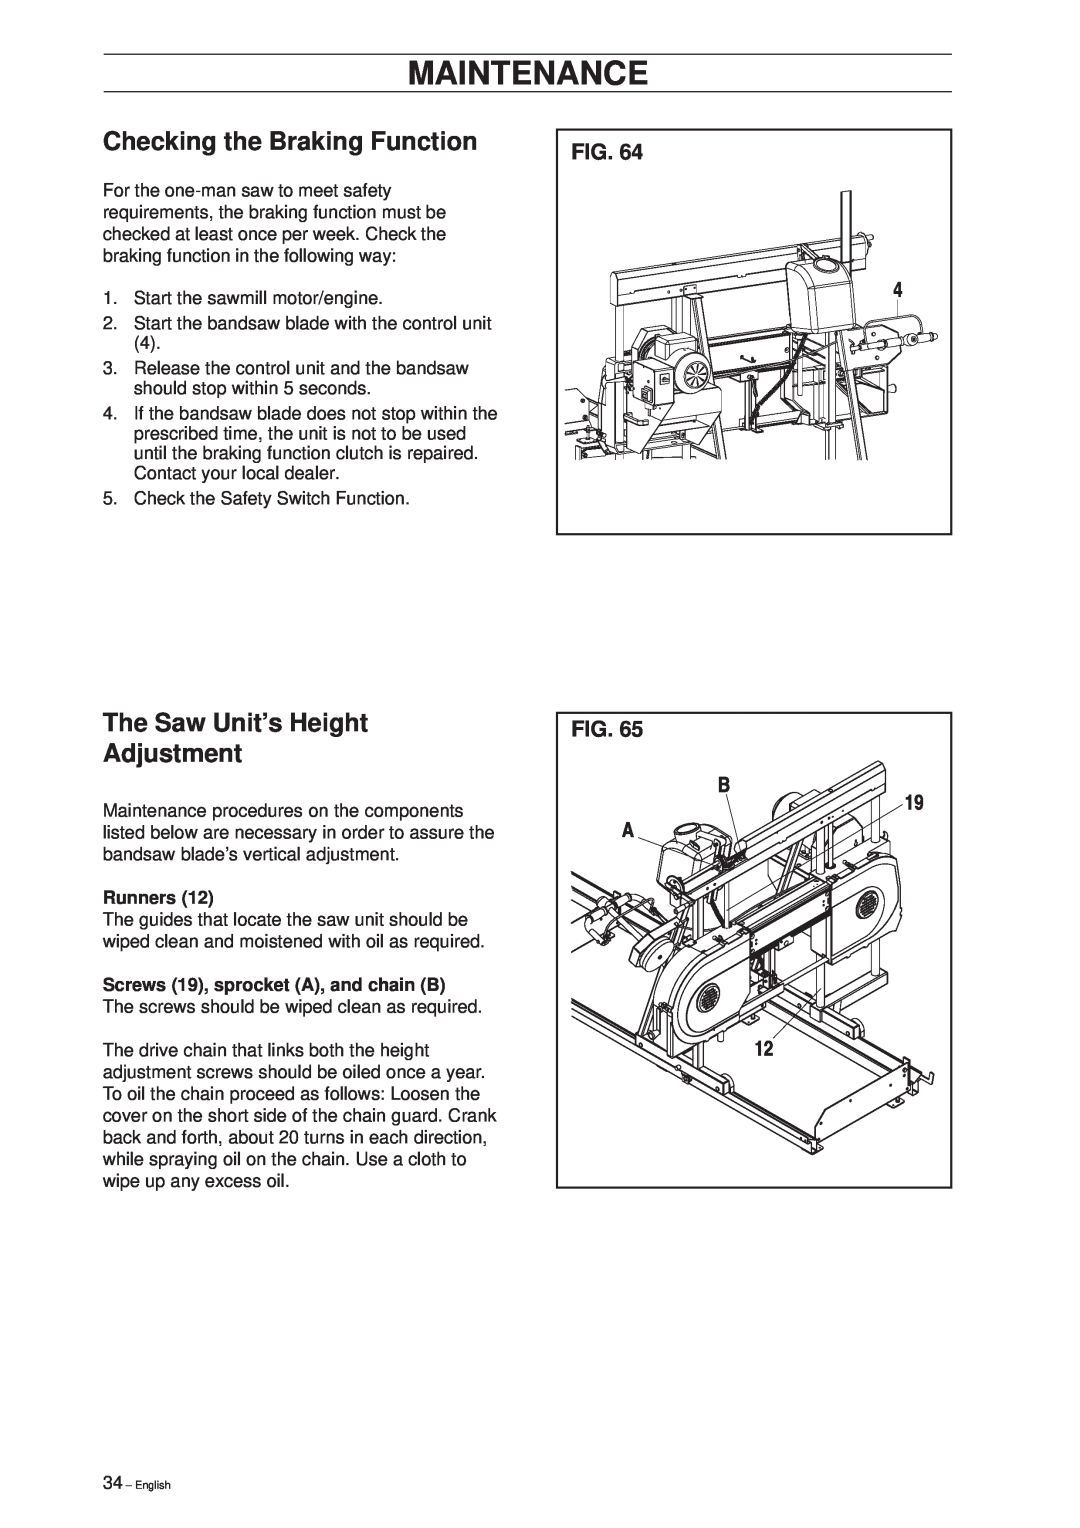 Husqvarna SMB 70, SMB 70 E manual Checking the Braking Function, The Saw Unit’s Height Adjustment, Maintenance, Runners 